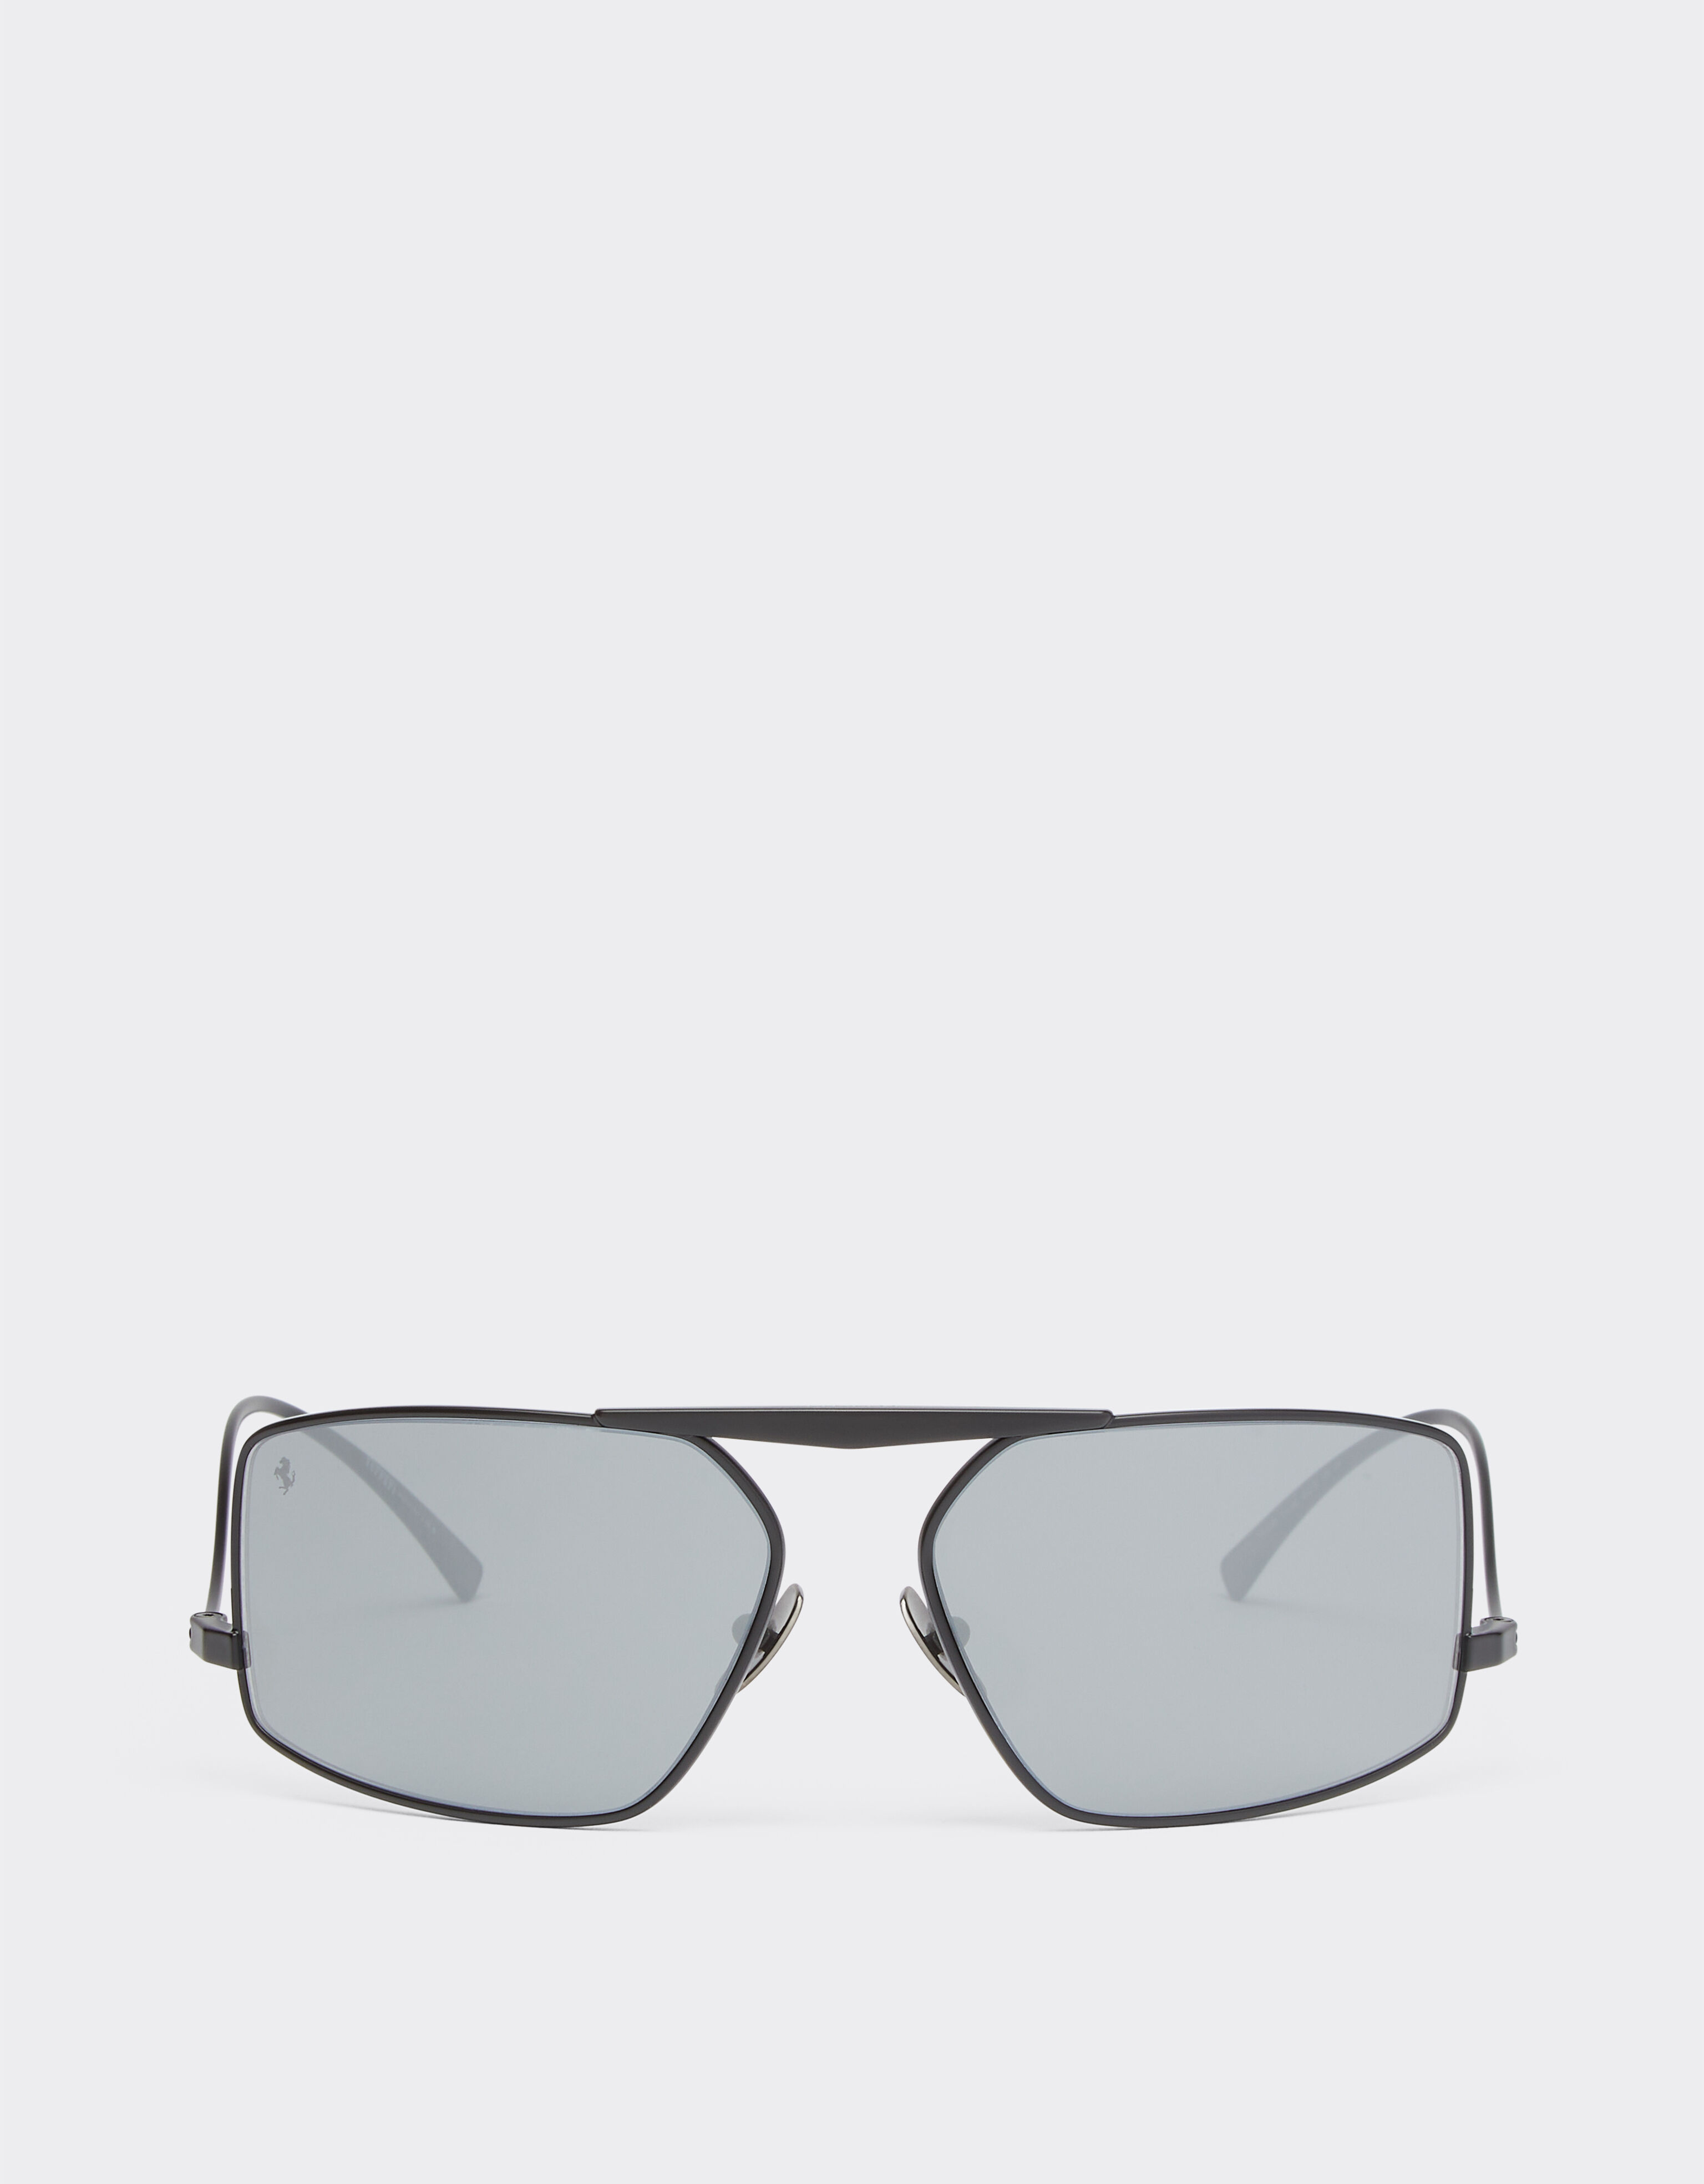 Ferrari Ferrari sunglasses in black metal with silver mirror lenses Ingrid F1255f